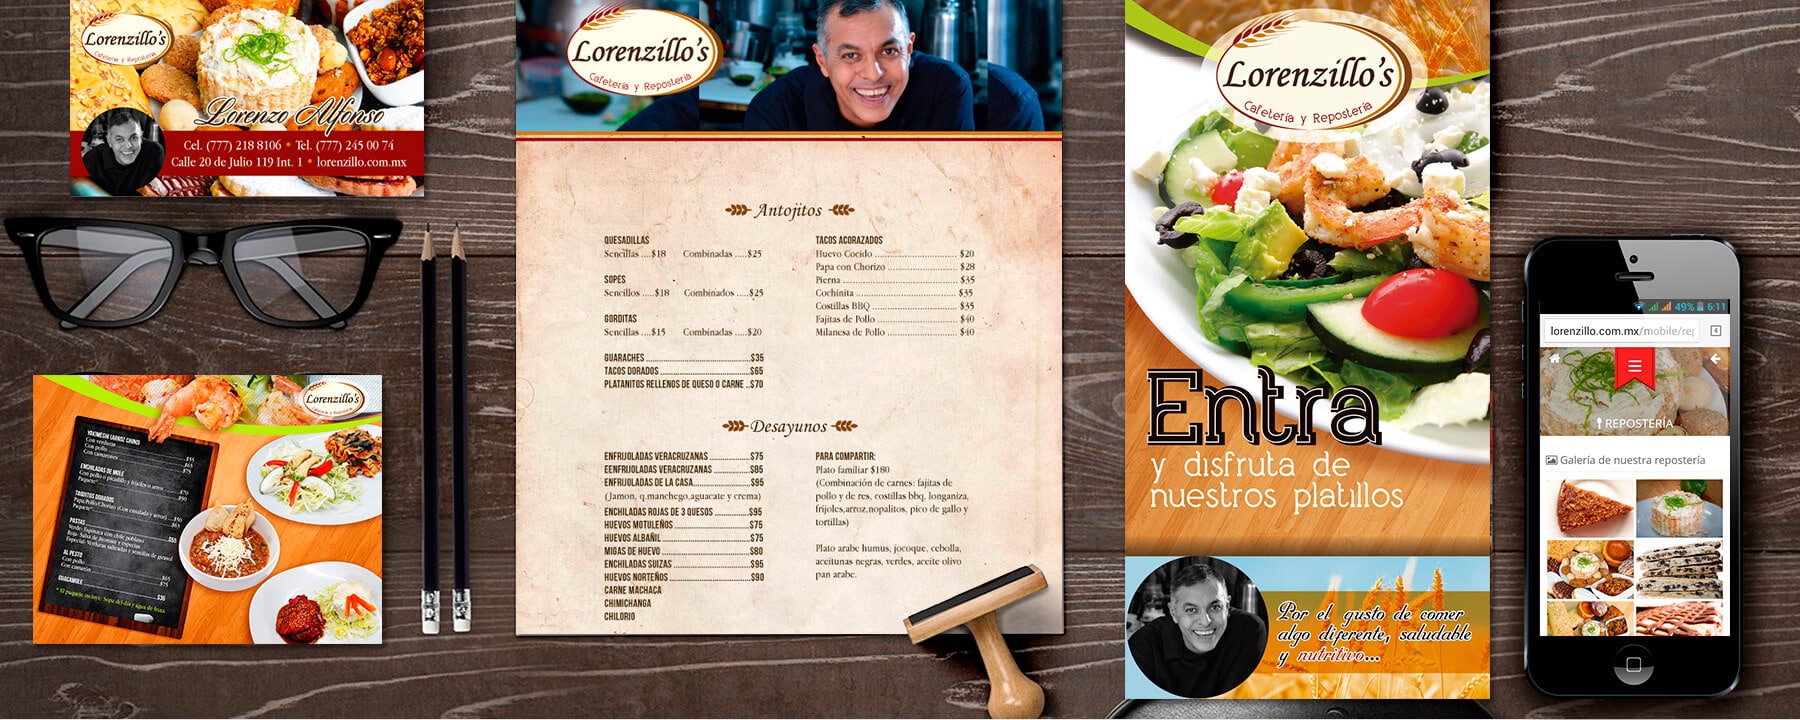 lorenzillo restaurante identidad visual corporativa